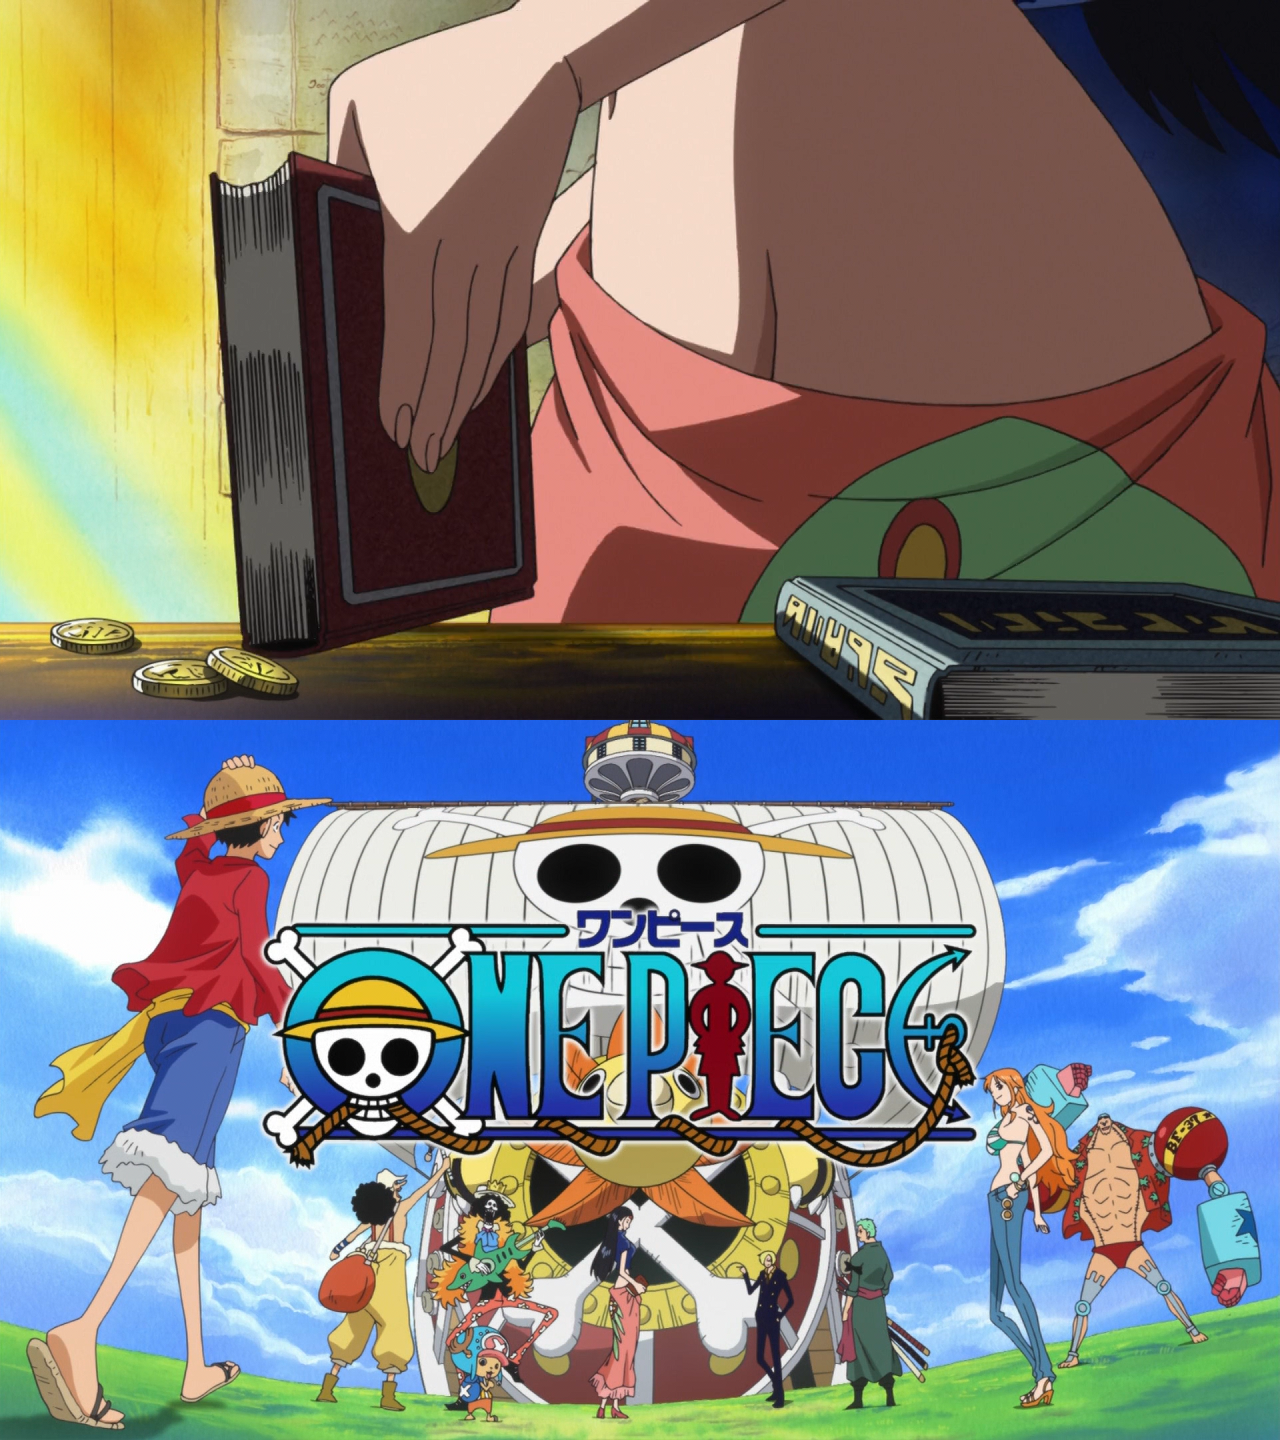 One Piece Film Heart Of Gold - Nico Robin by korkaranlik